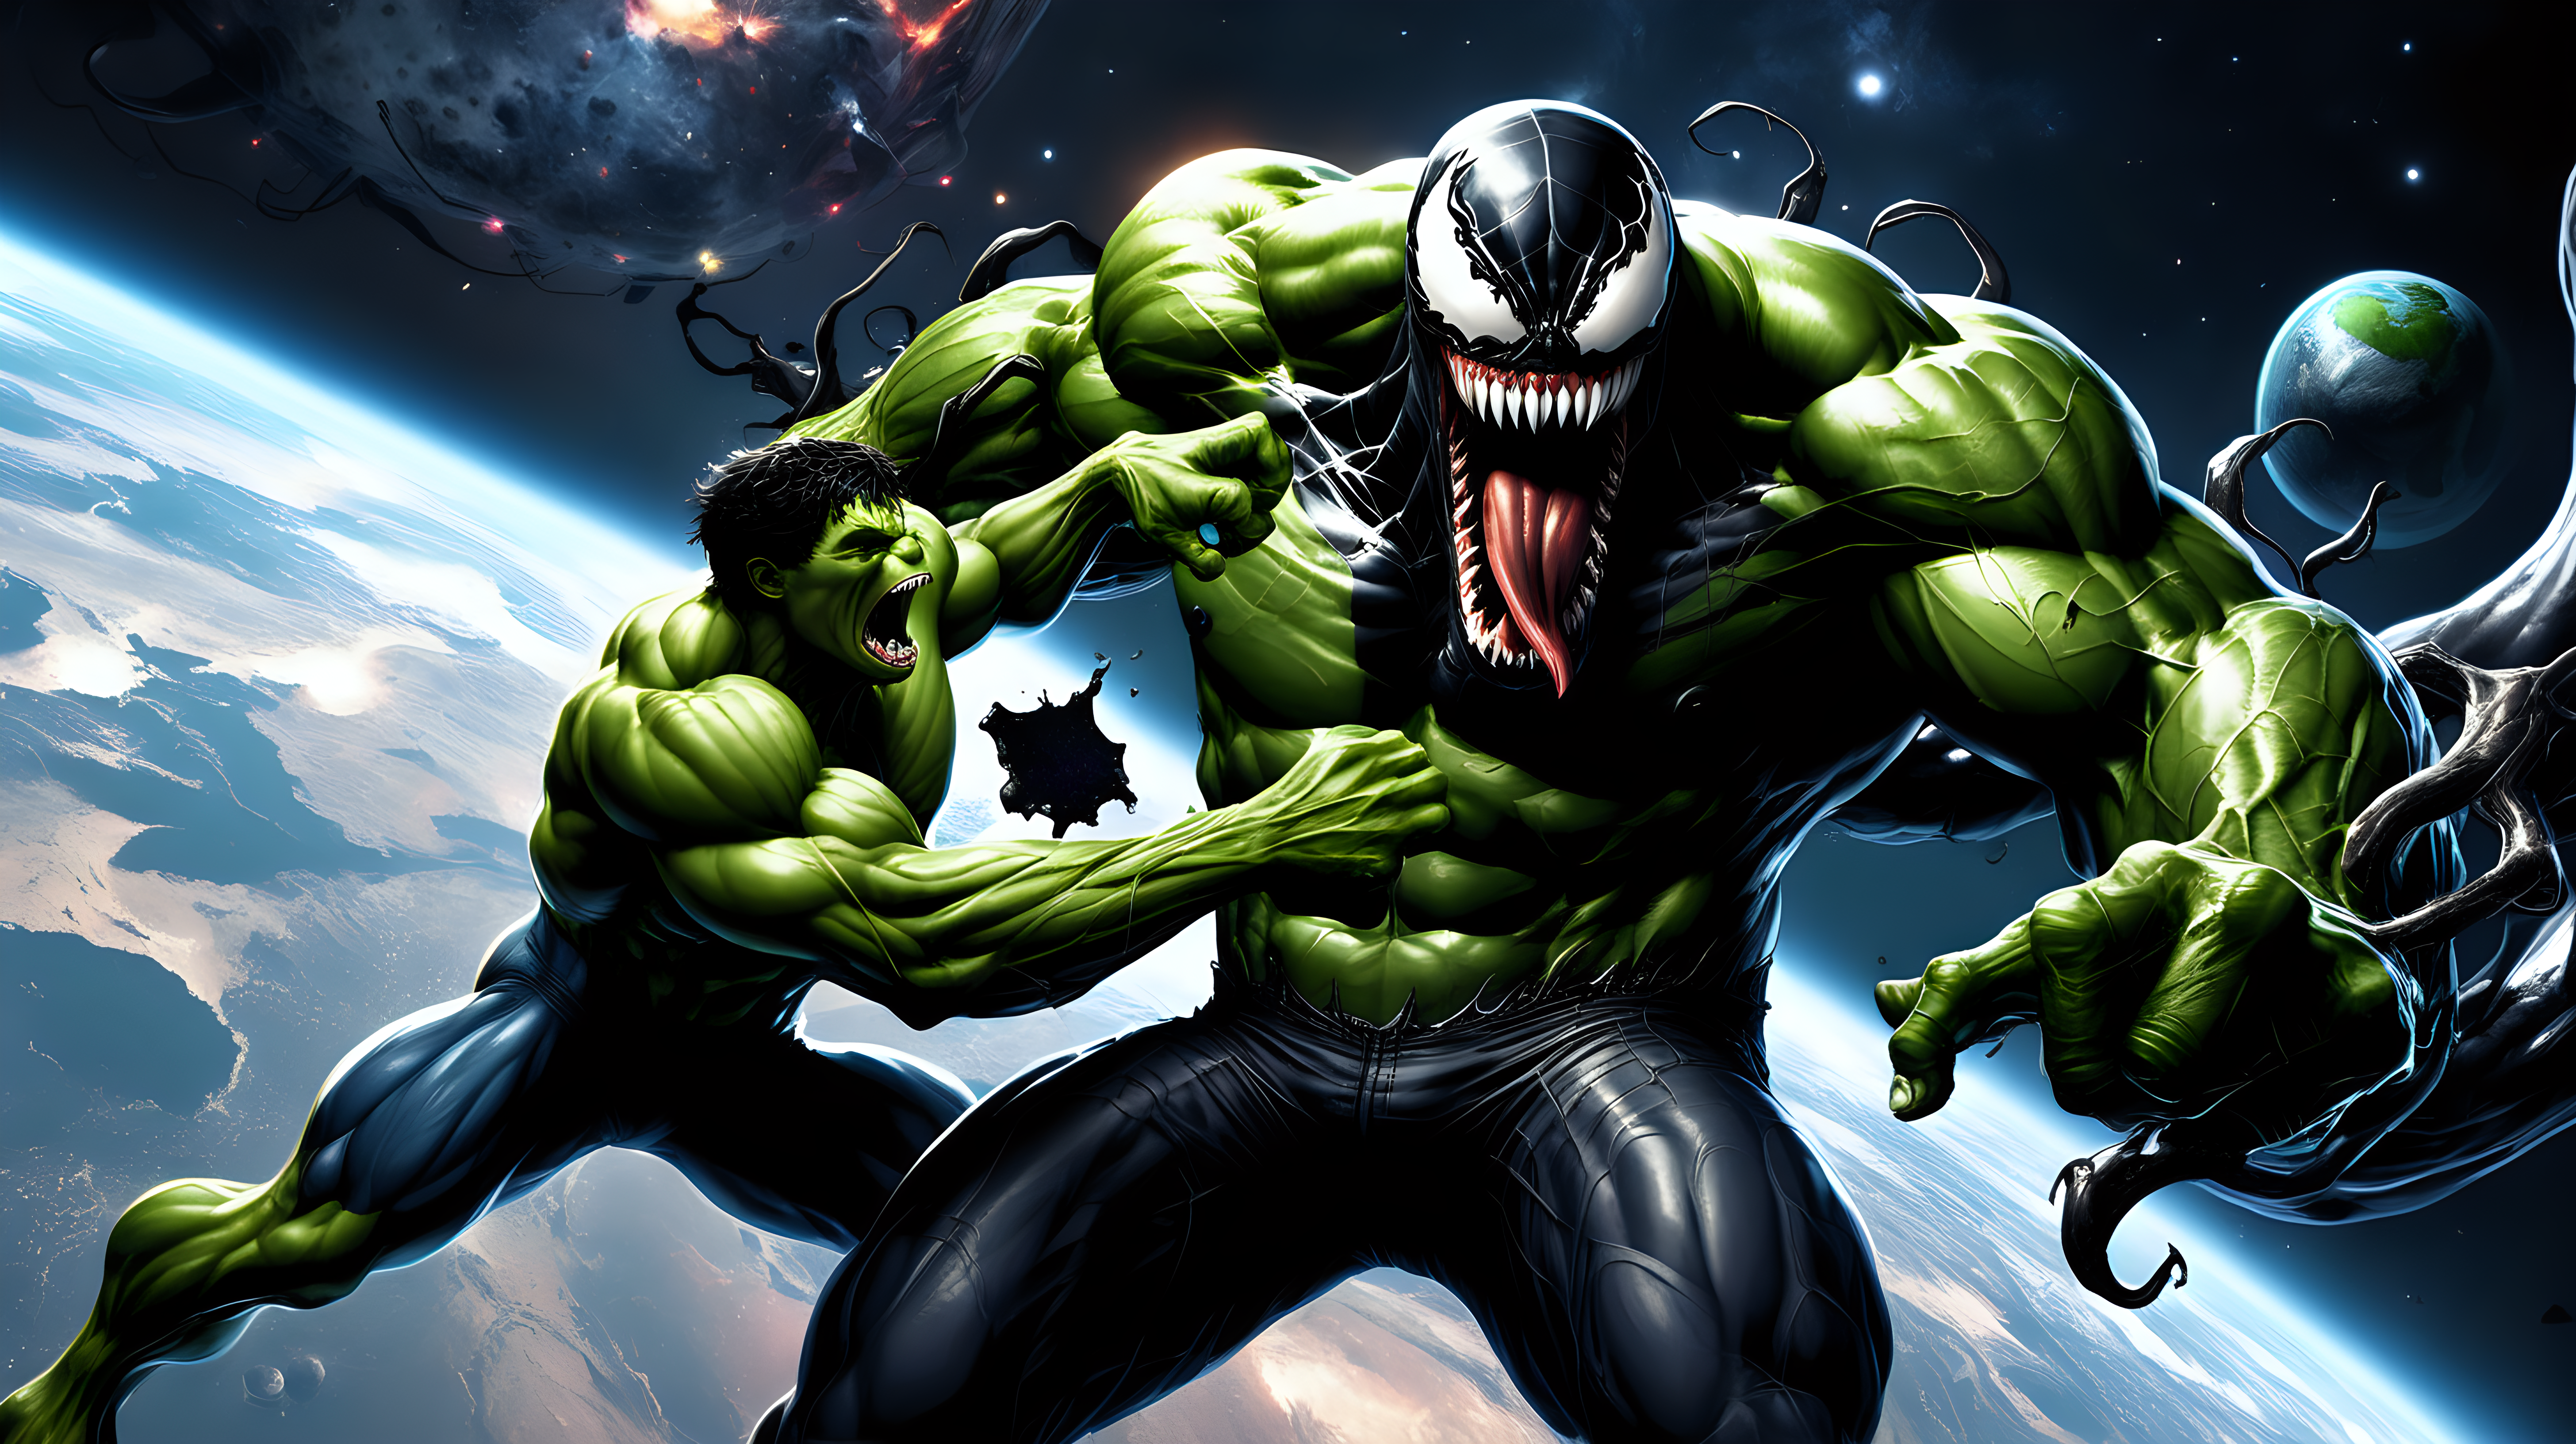 Venom fights the Hulk in space